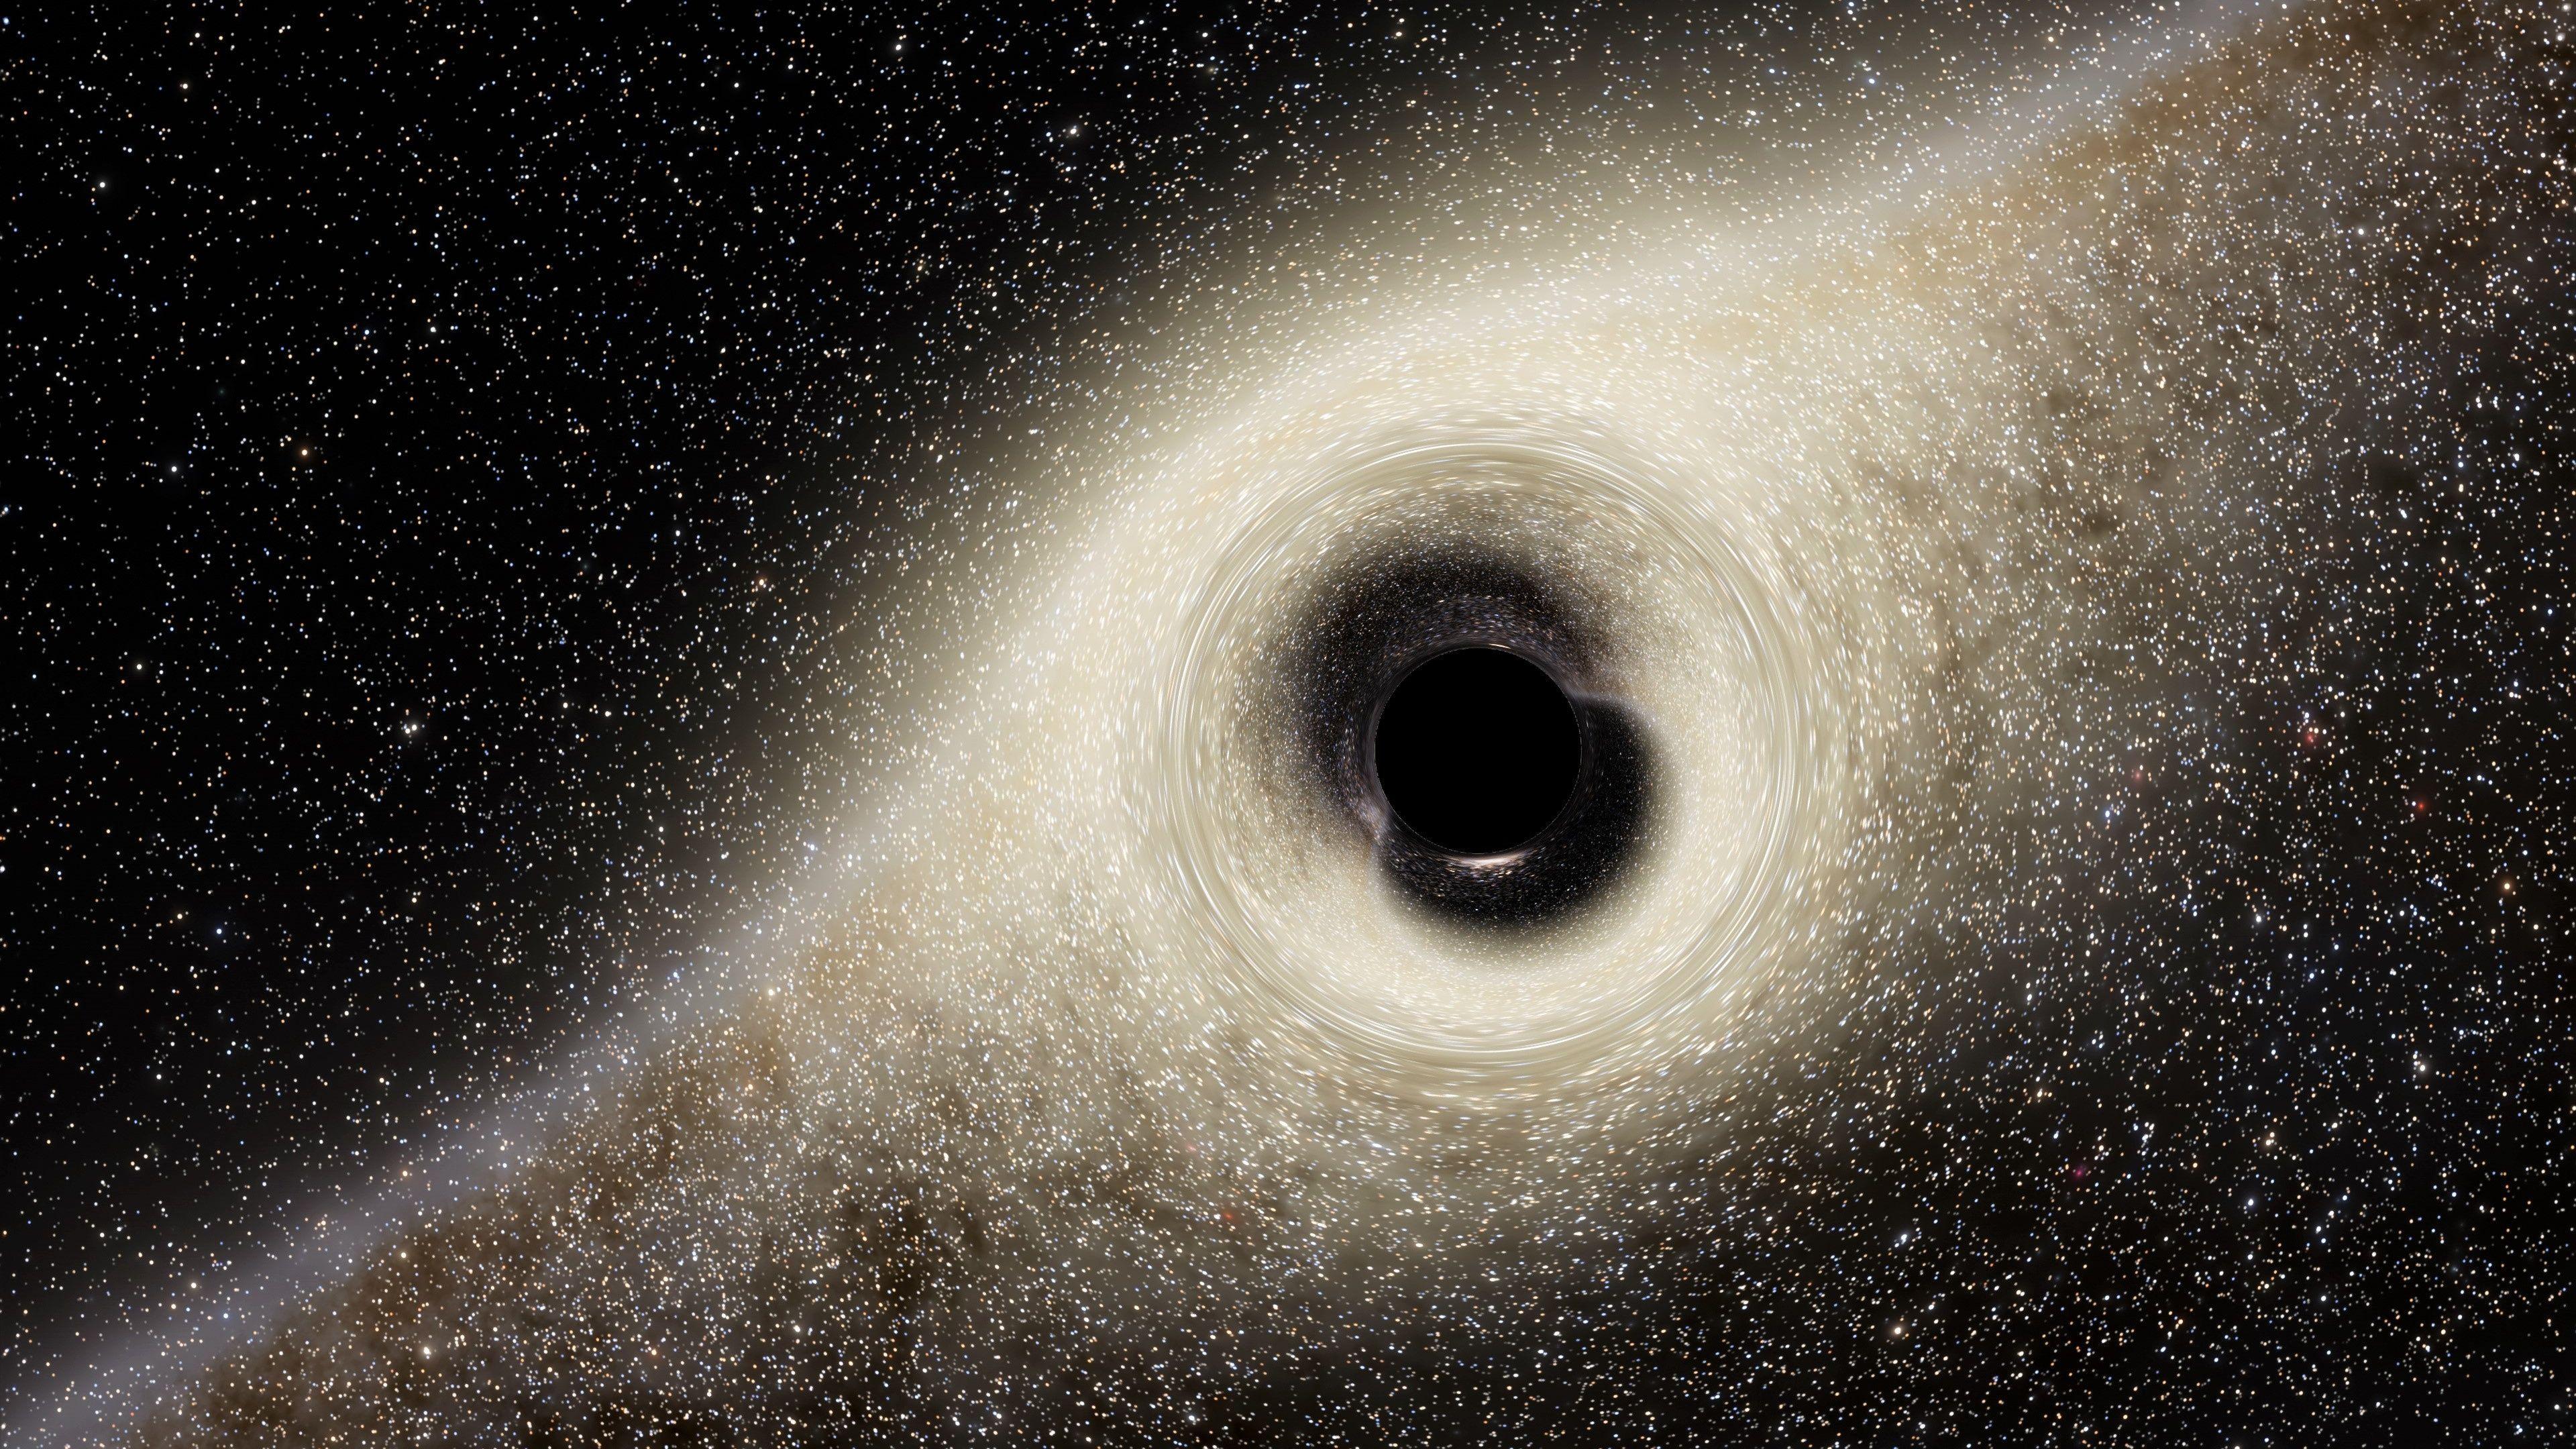 Space black hole wallpaper - ferytrading